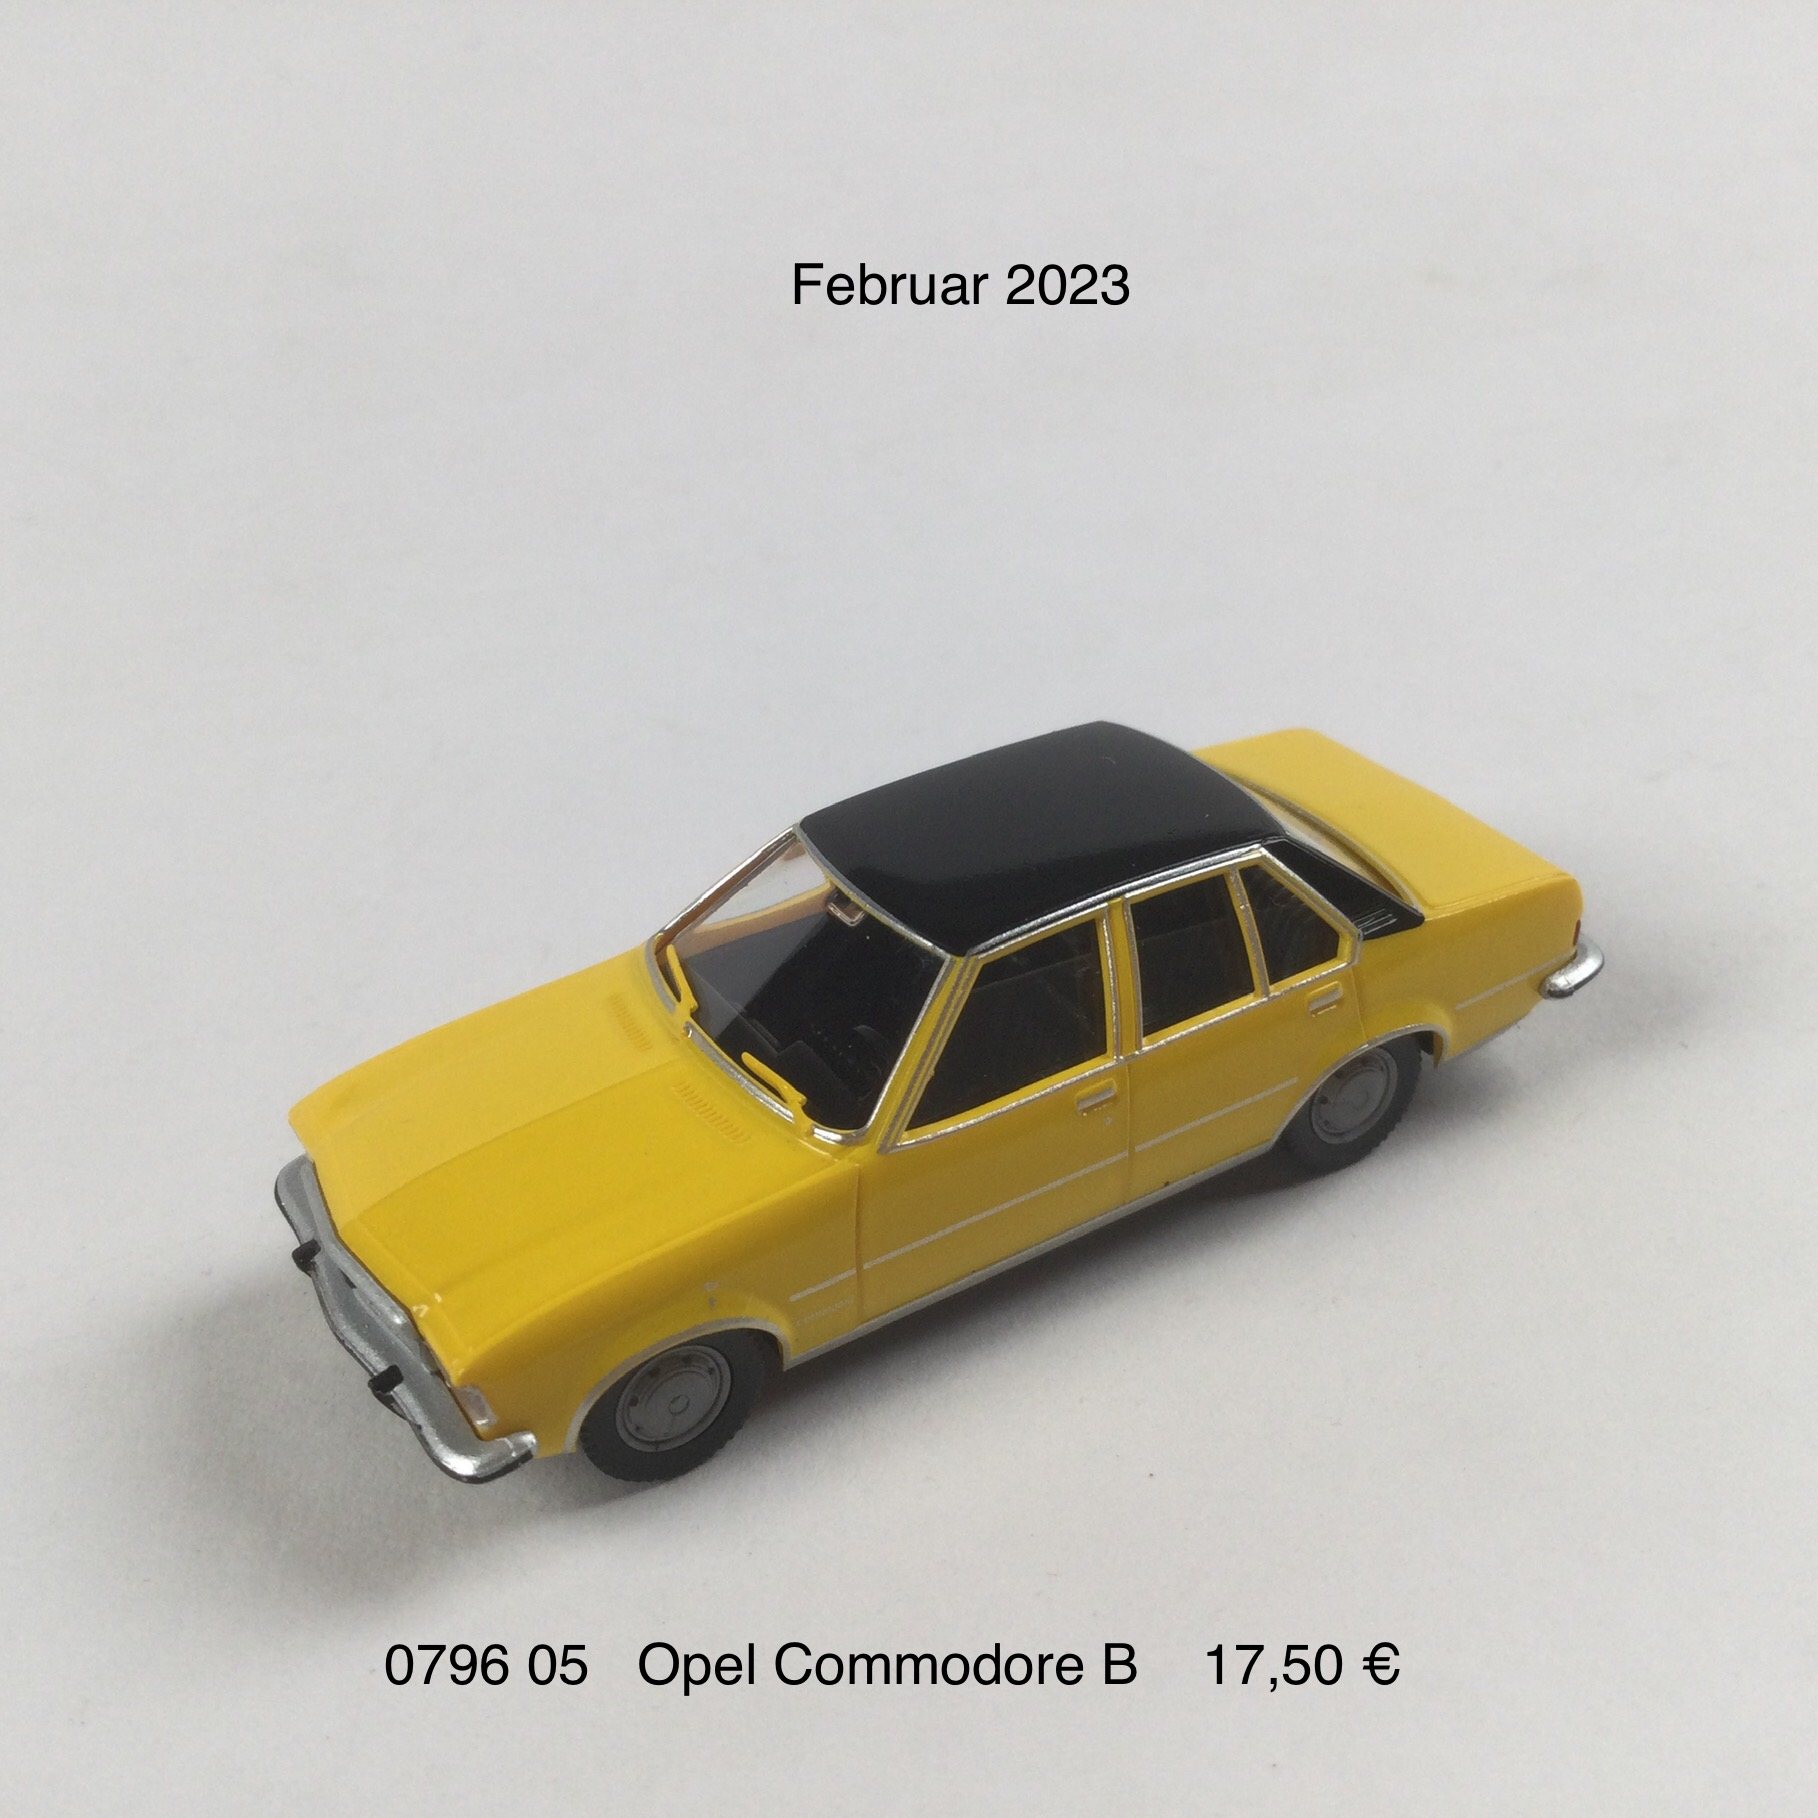 Opel Commodore B "verkehrsgelb"